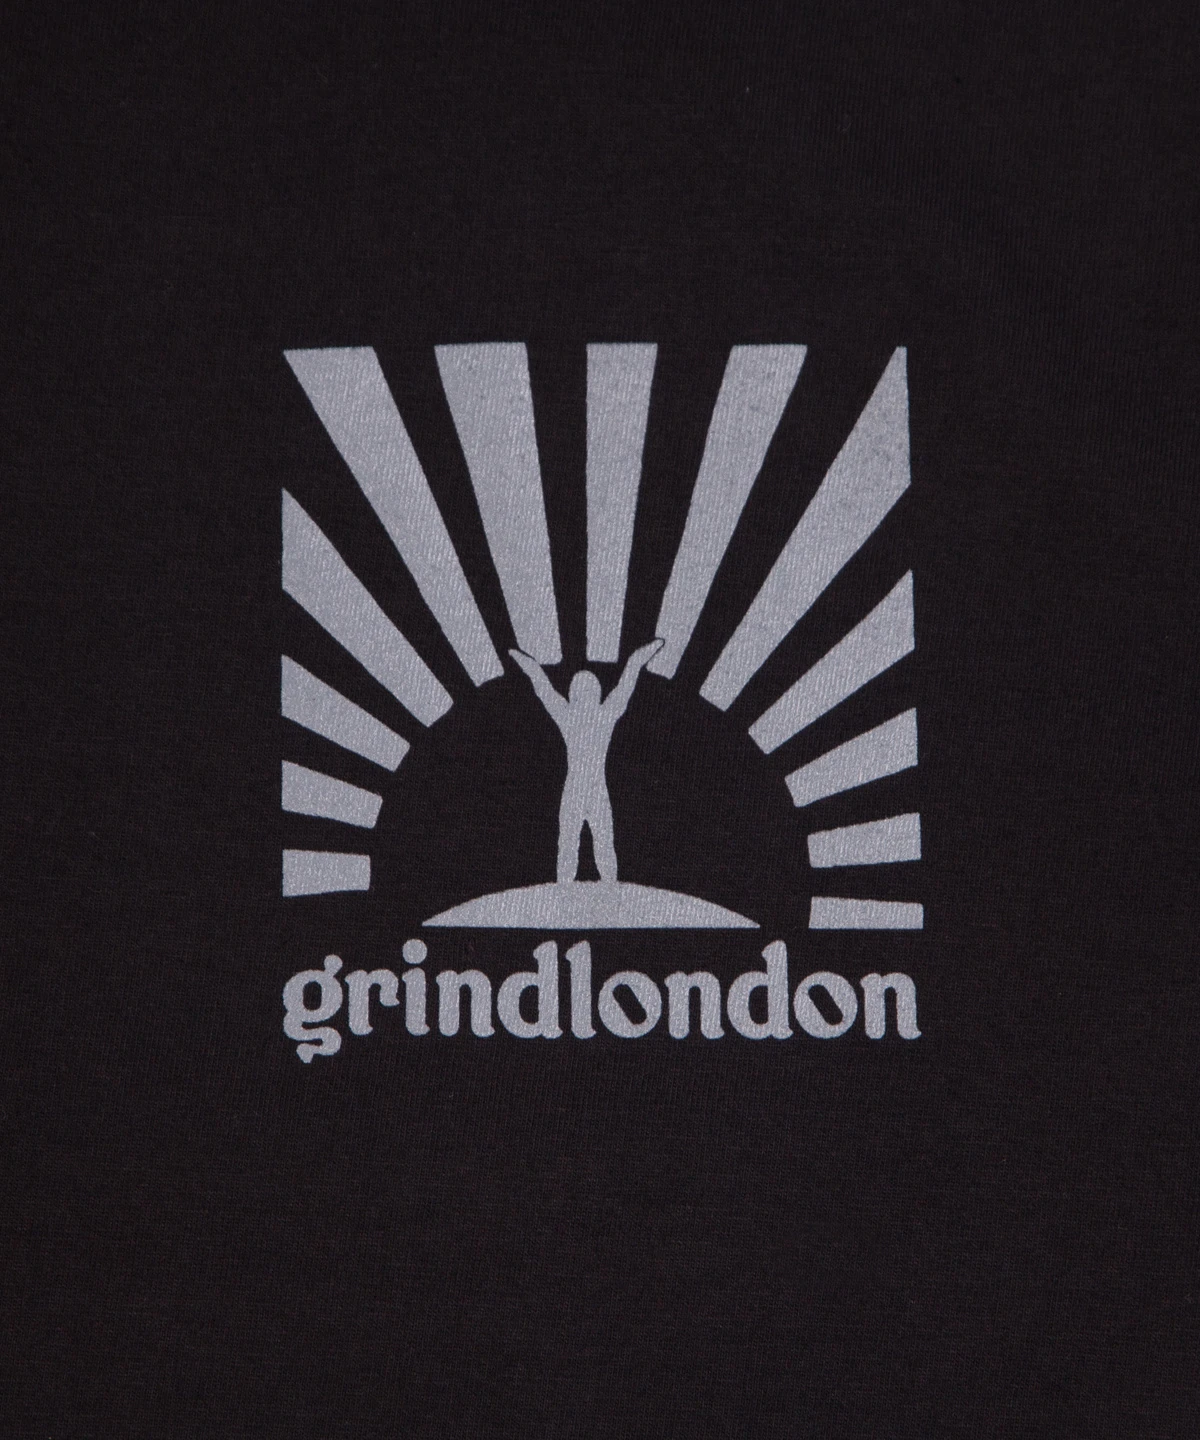 grindlondon 100% cotton t-shirt black gone travel hand screen printed t-shirt